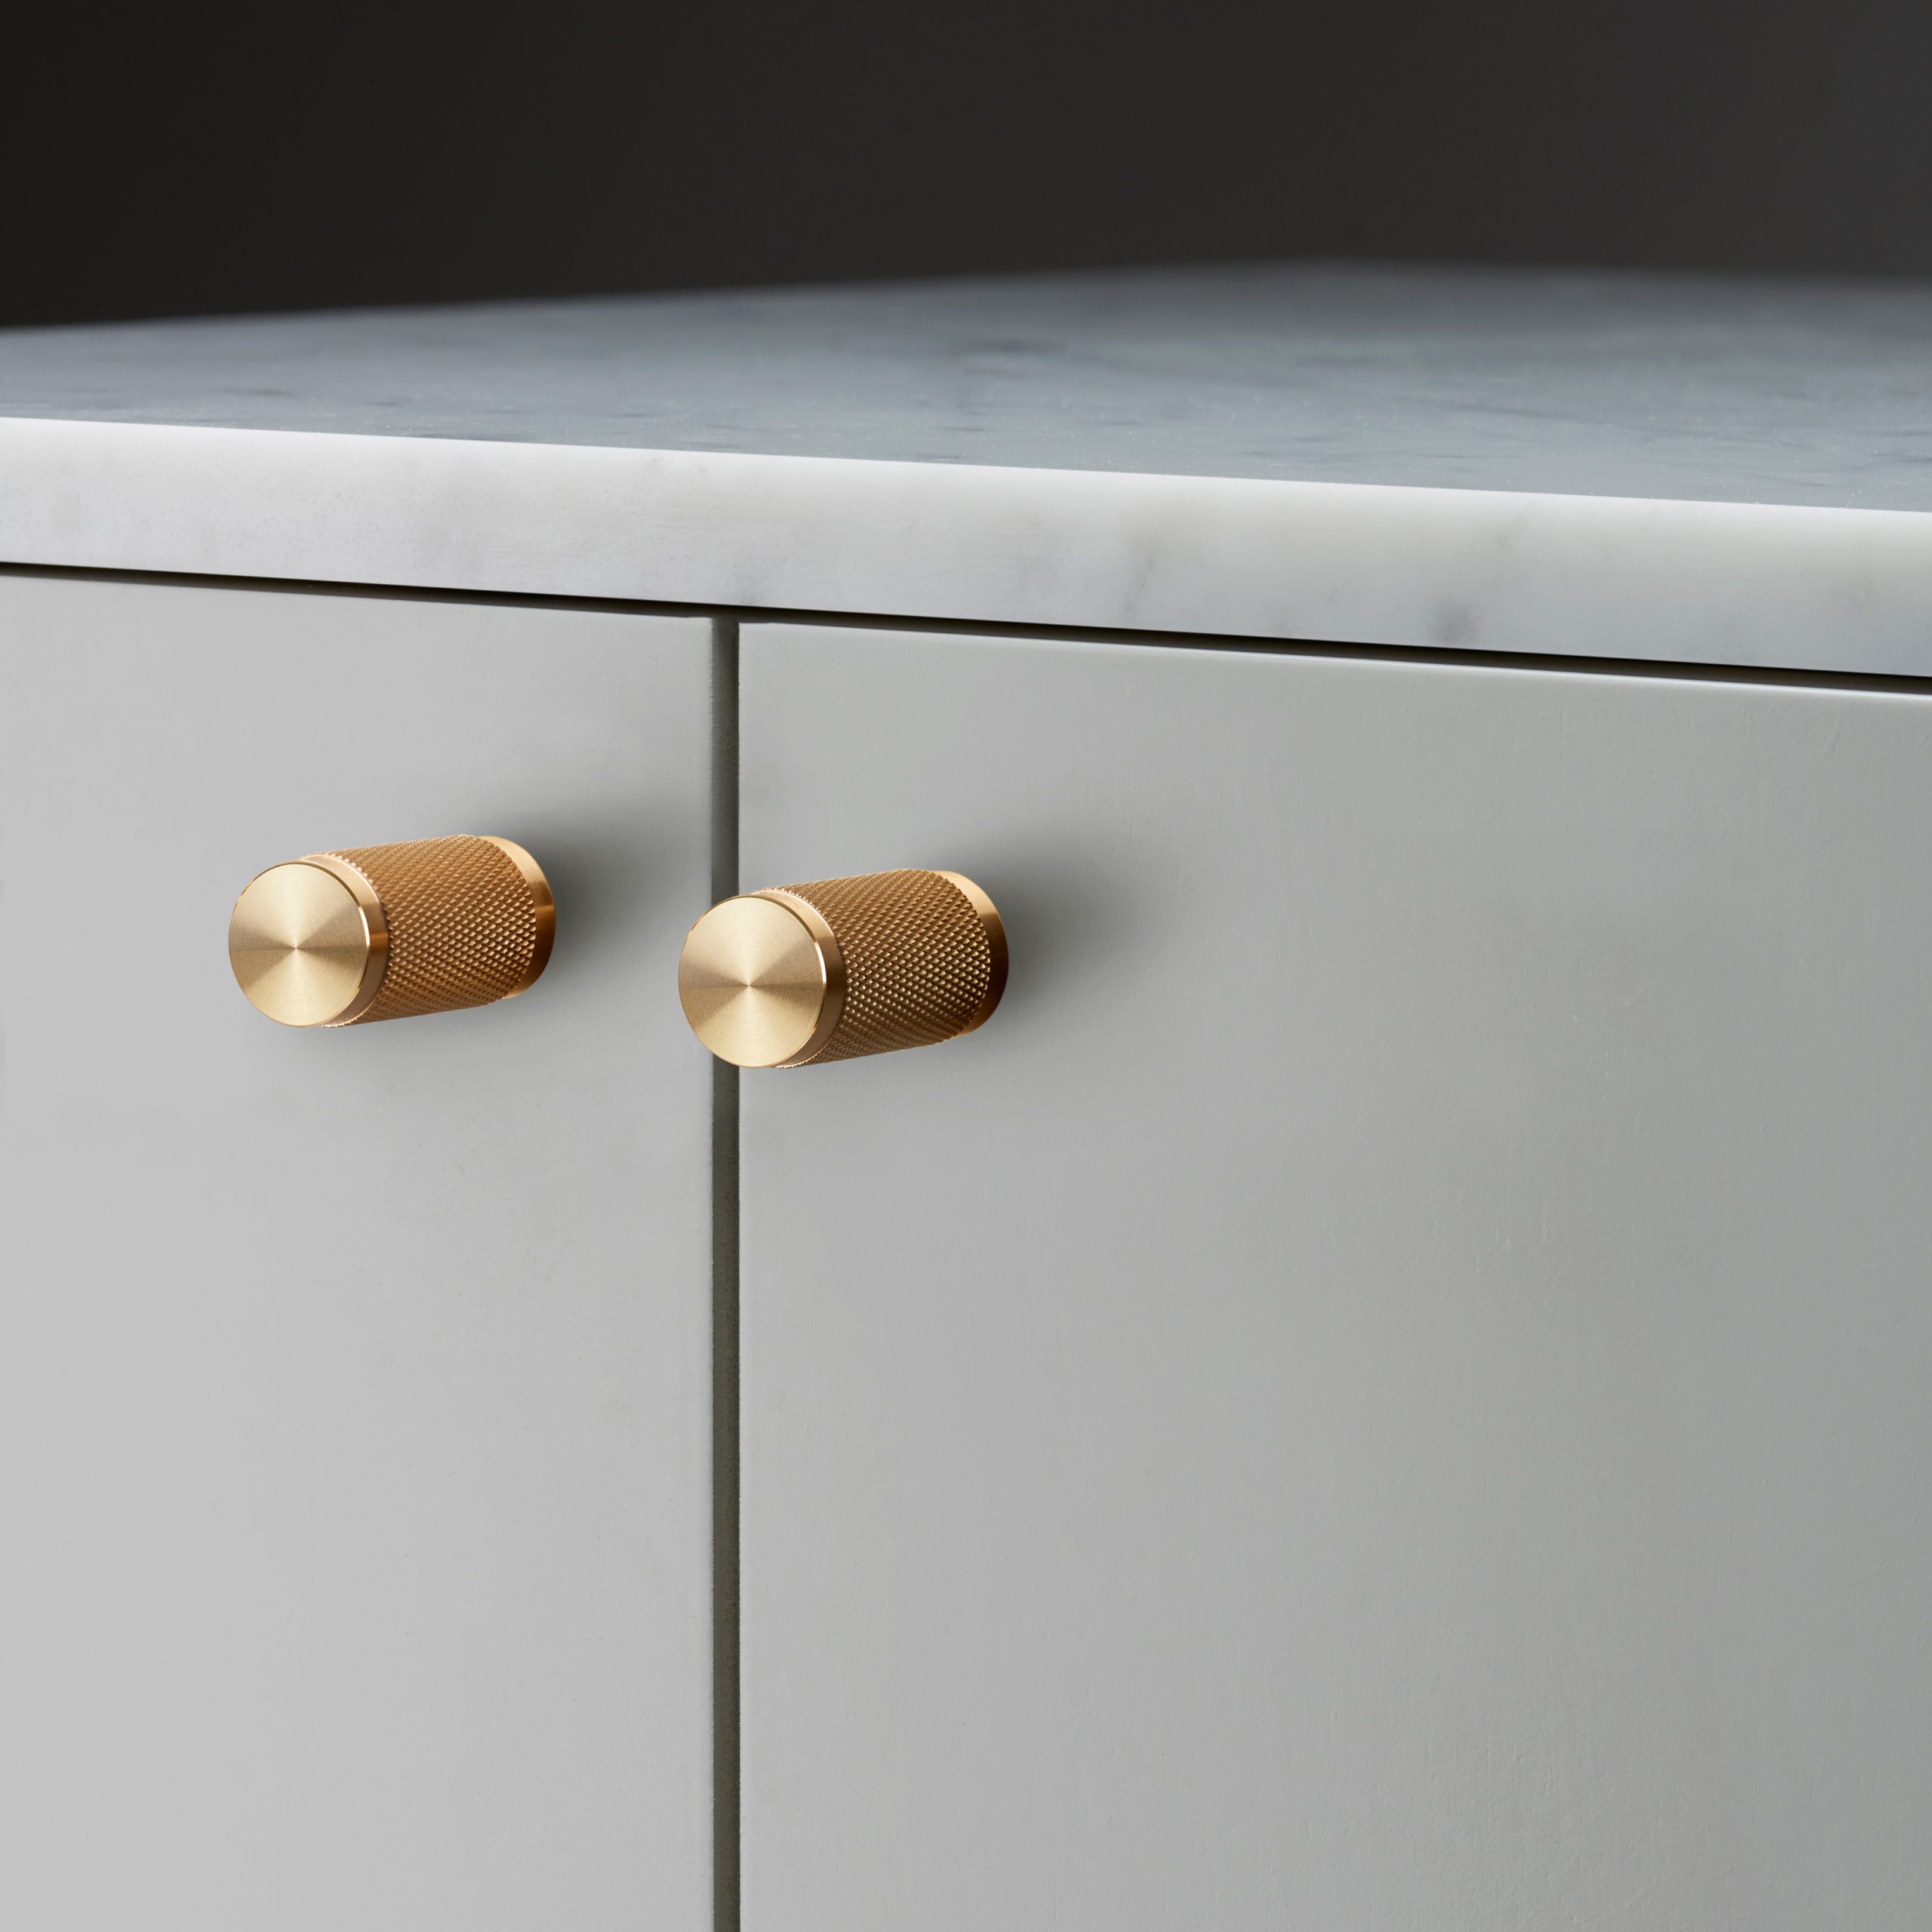 L shaped solid brass kitchen drawer handles